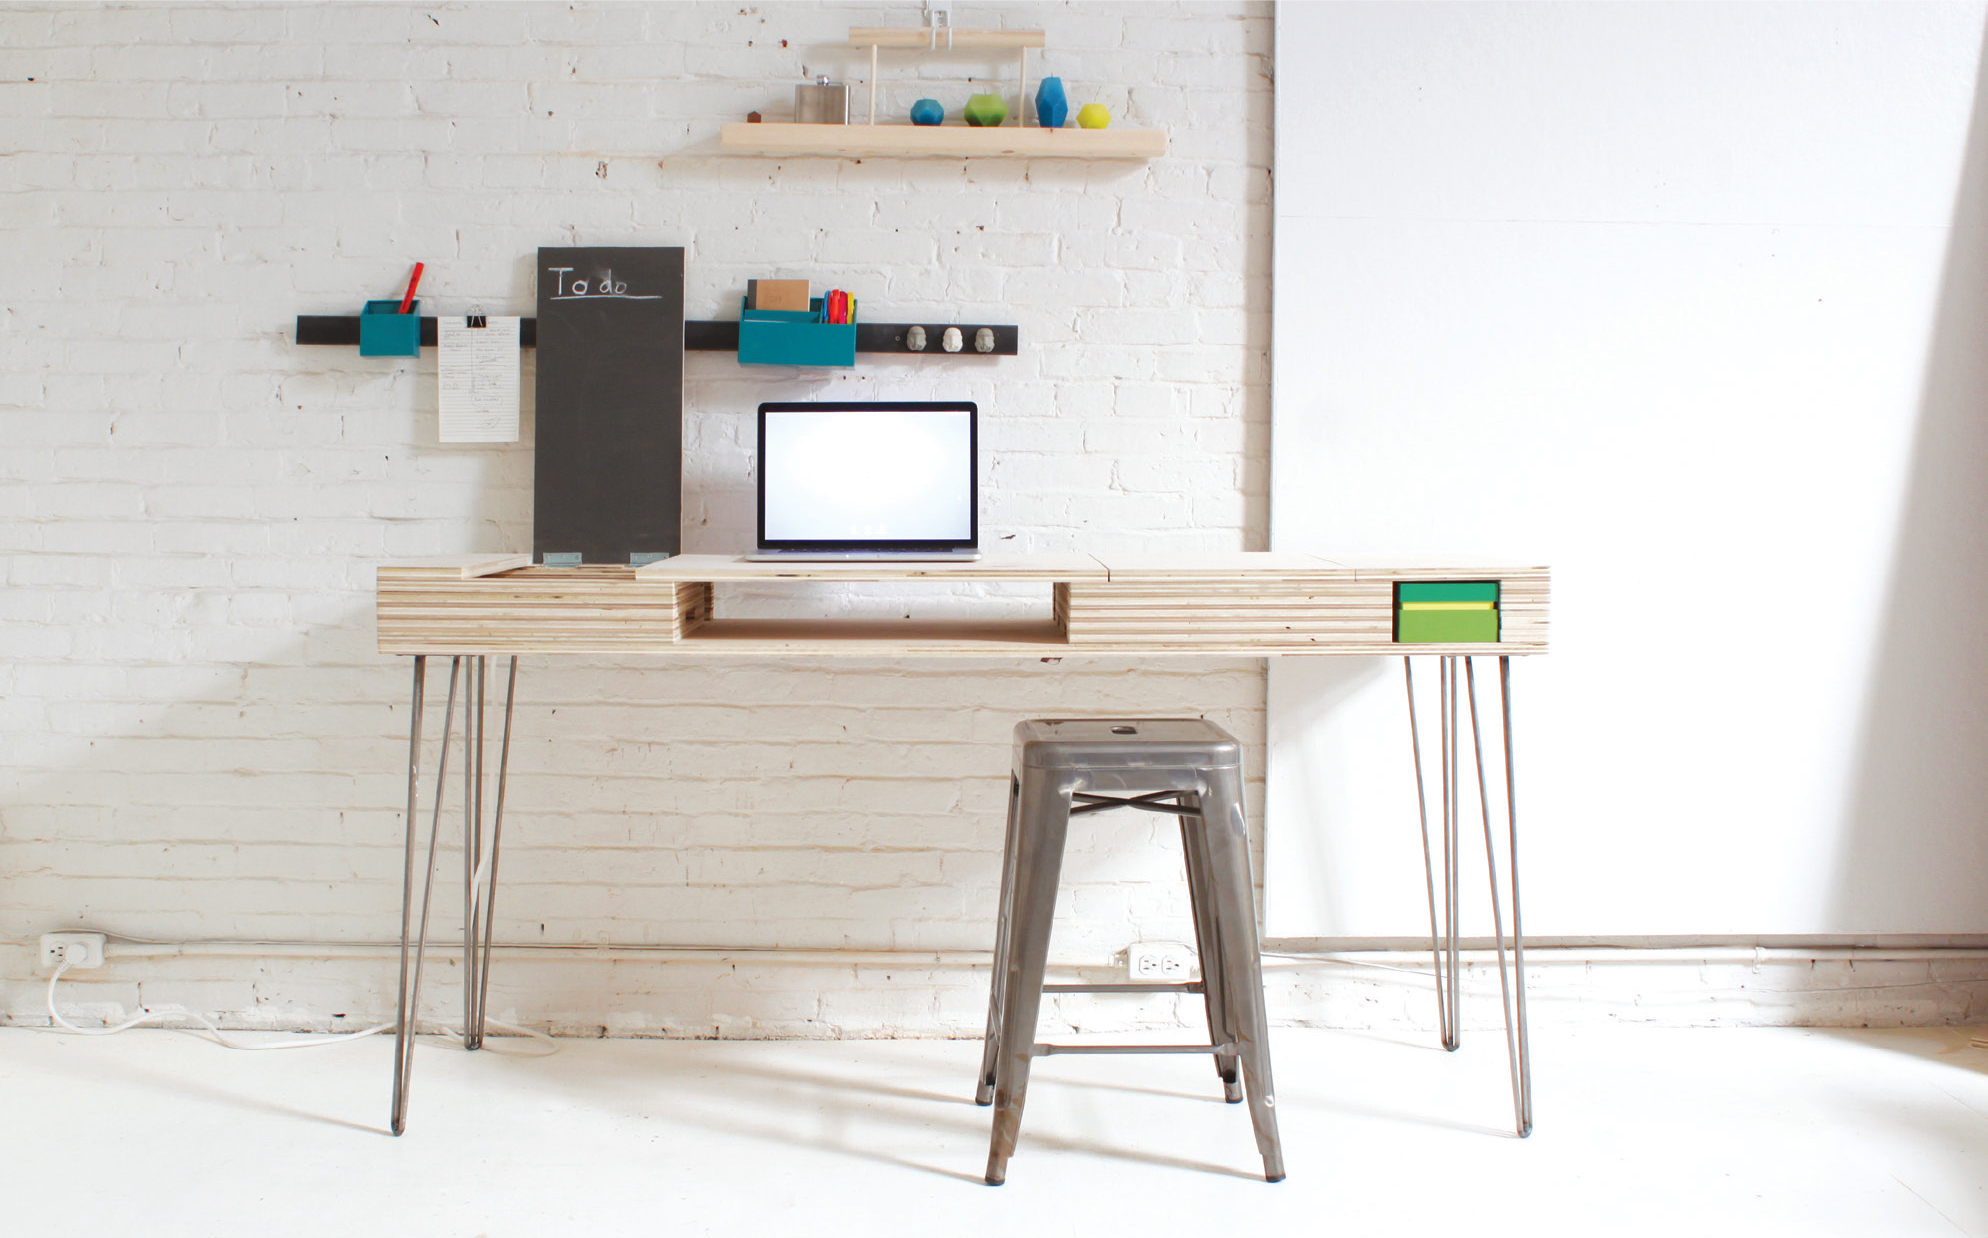 Build a Stylish, Modern Desk with Flip-Up Storage